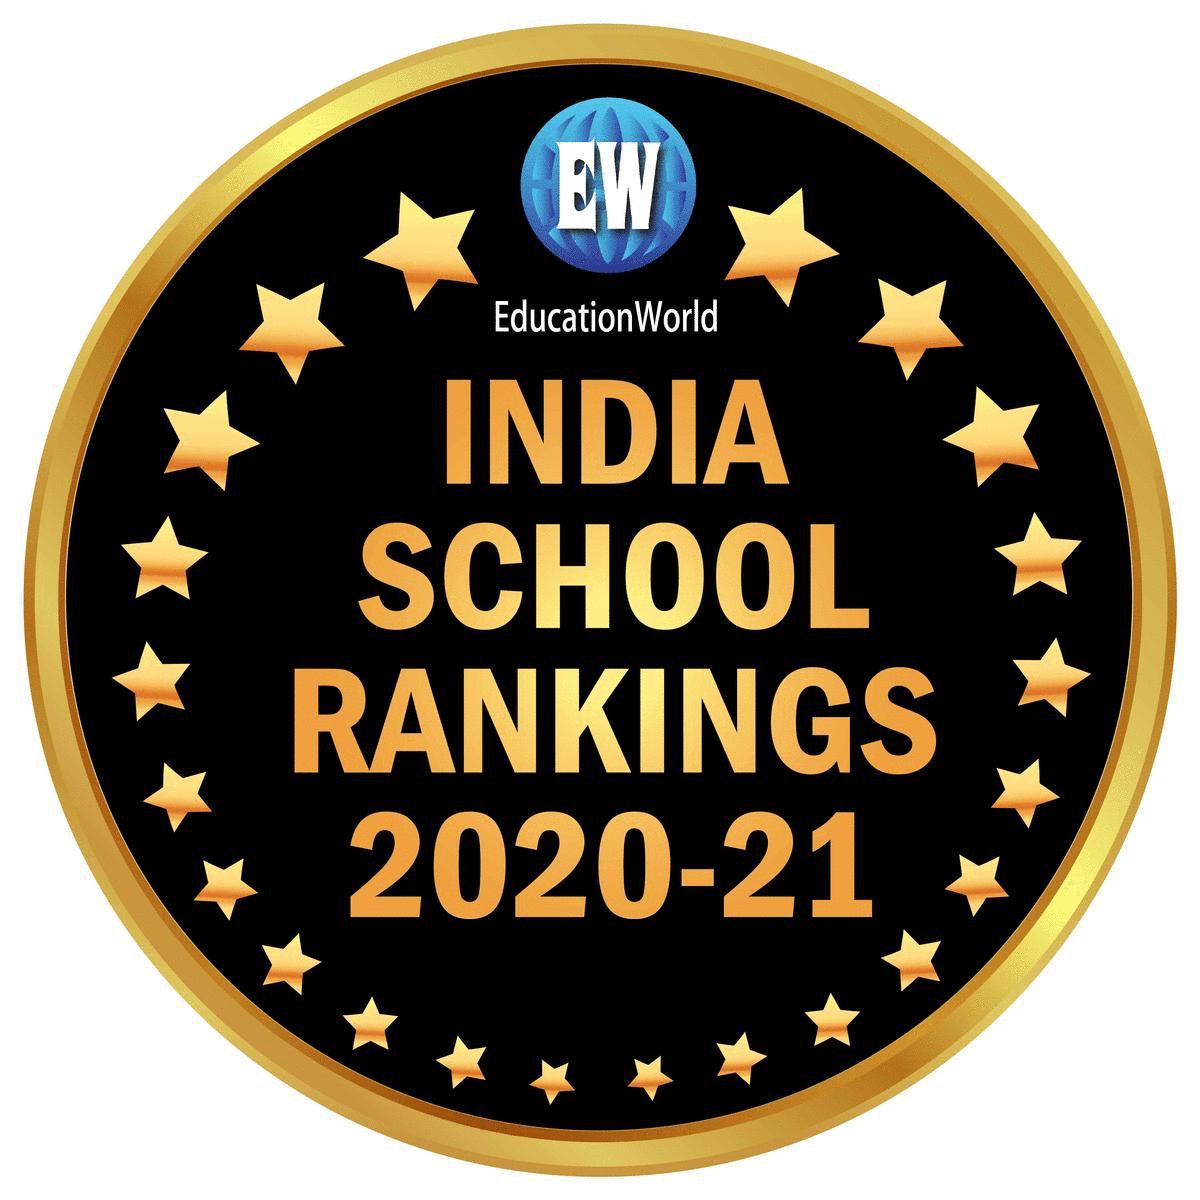 EducationWorld India School Rankings 2020-21